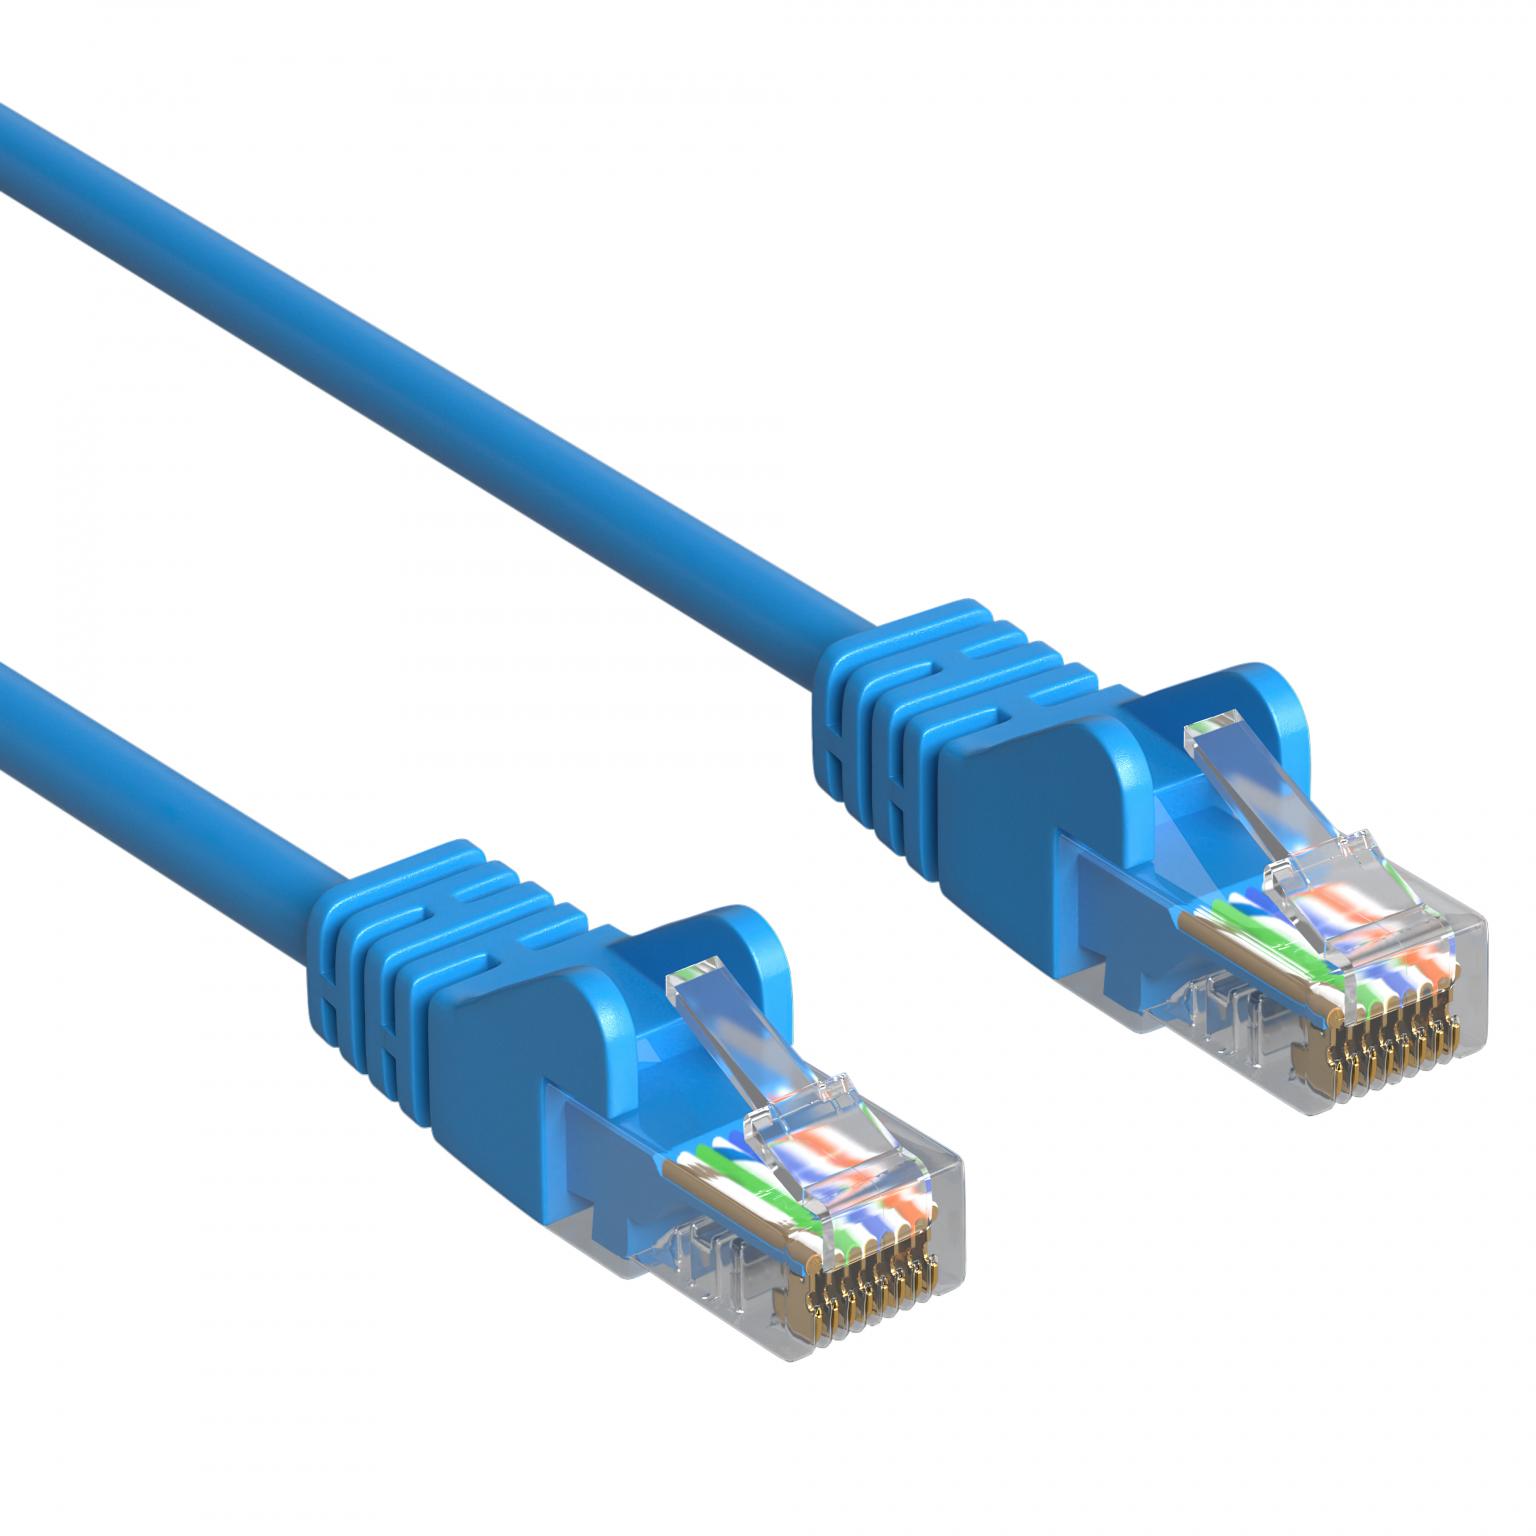 UTP NETWERK KABEL Type: CAT5 netwerkkabel, (patch kabel), Lengte: 15 Meter, Kleur: Blauw.